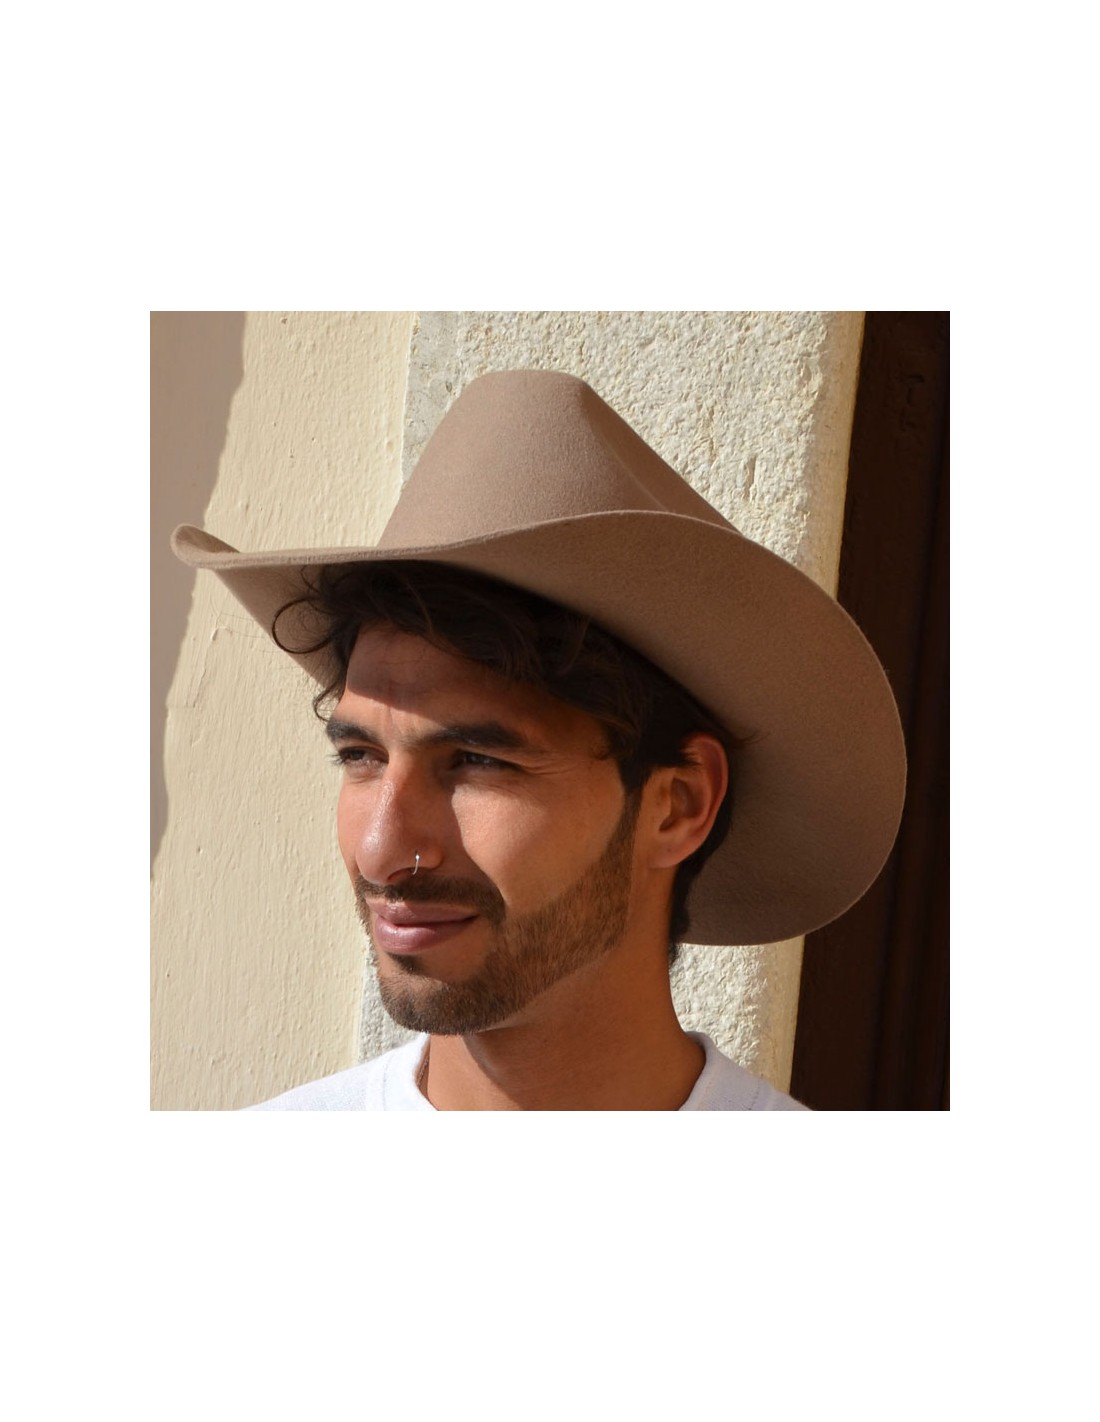 https://www.raceuhats.com/3814-thickbox_default/dallas-cowboy-hat-men.jpg